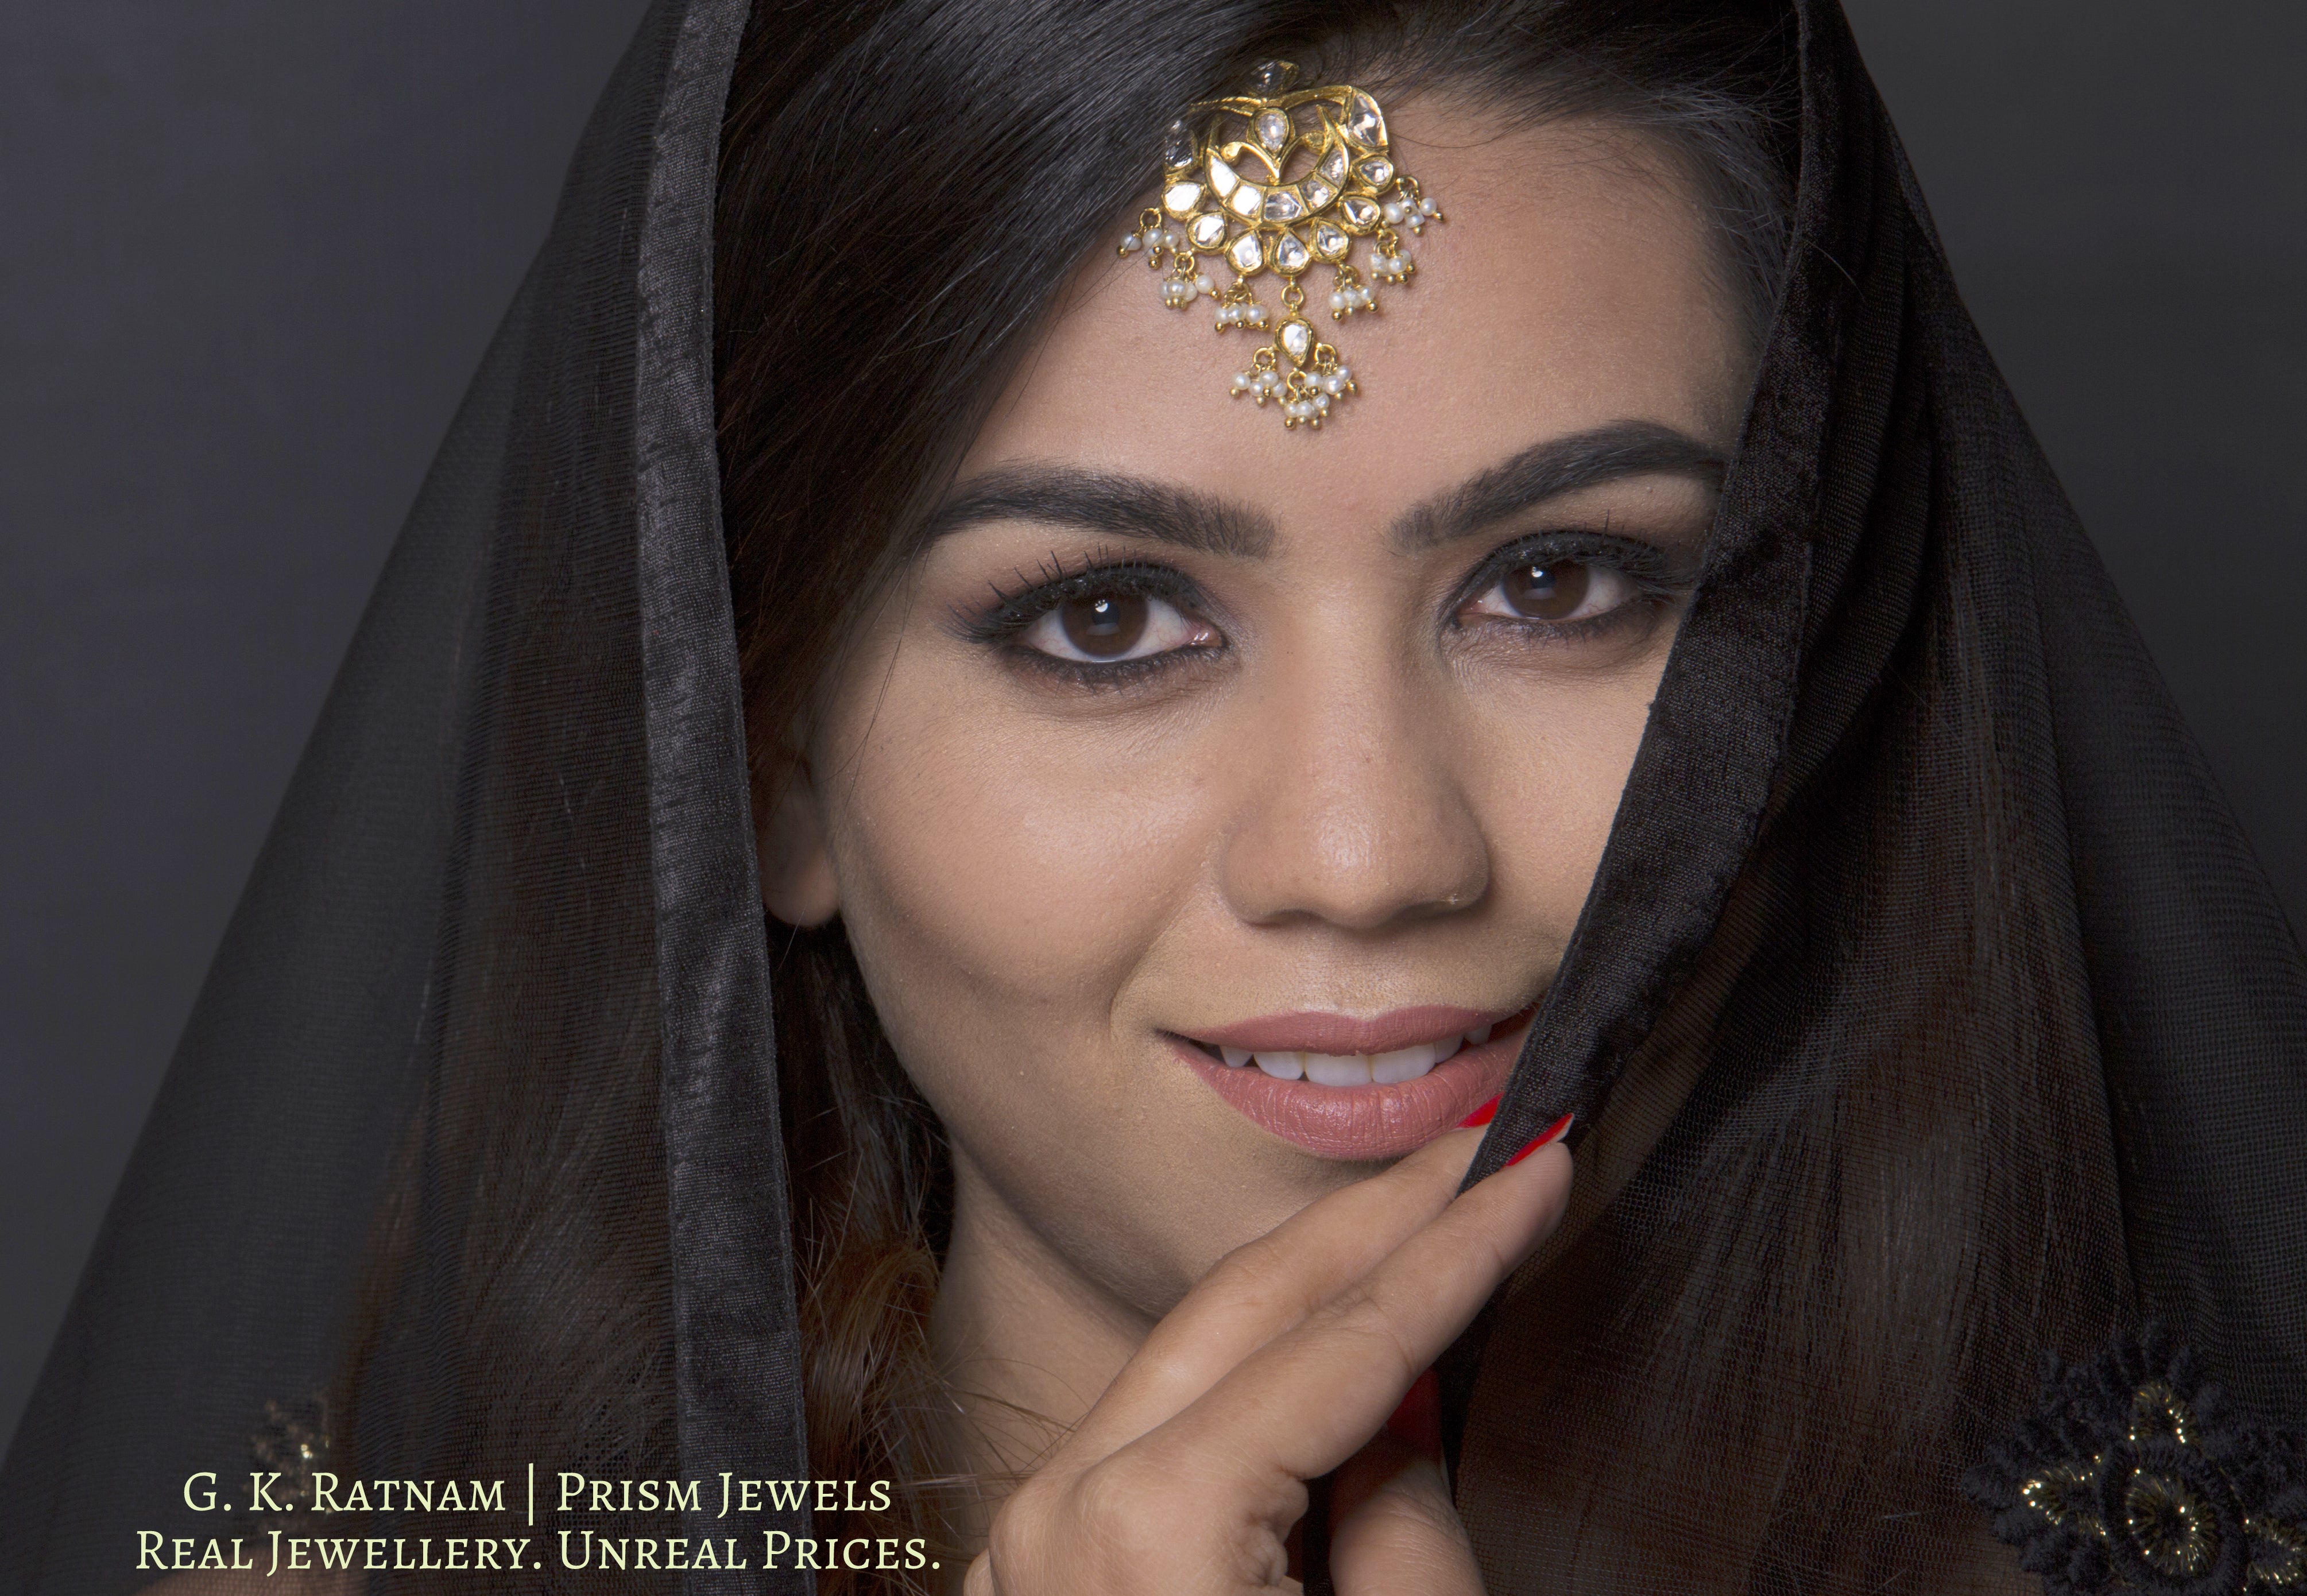 18k Gold and Diamond Polki Maang Tika with Natural Hyderabadi Pearl clusters - G. K. Ratnam